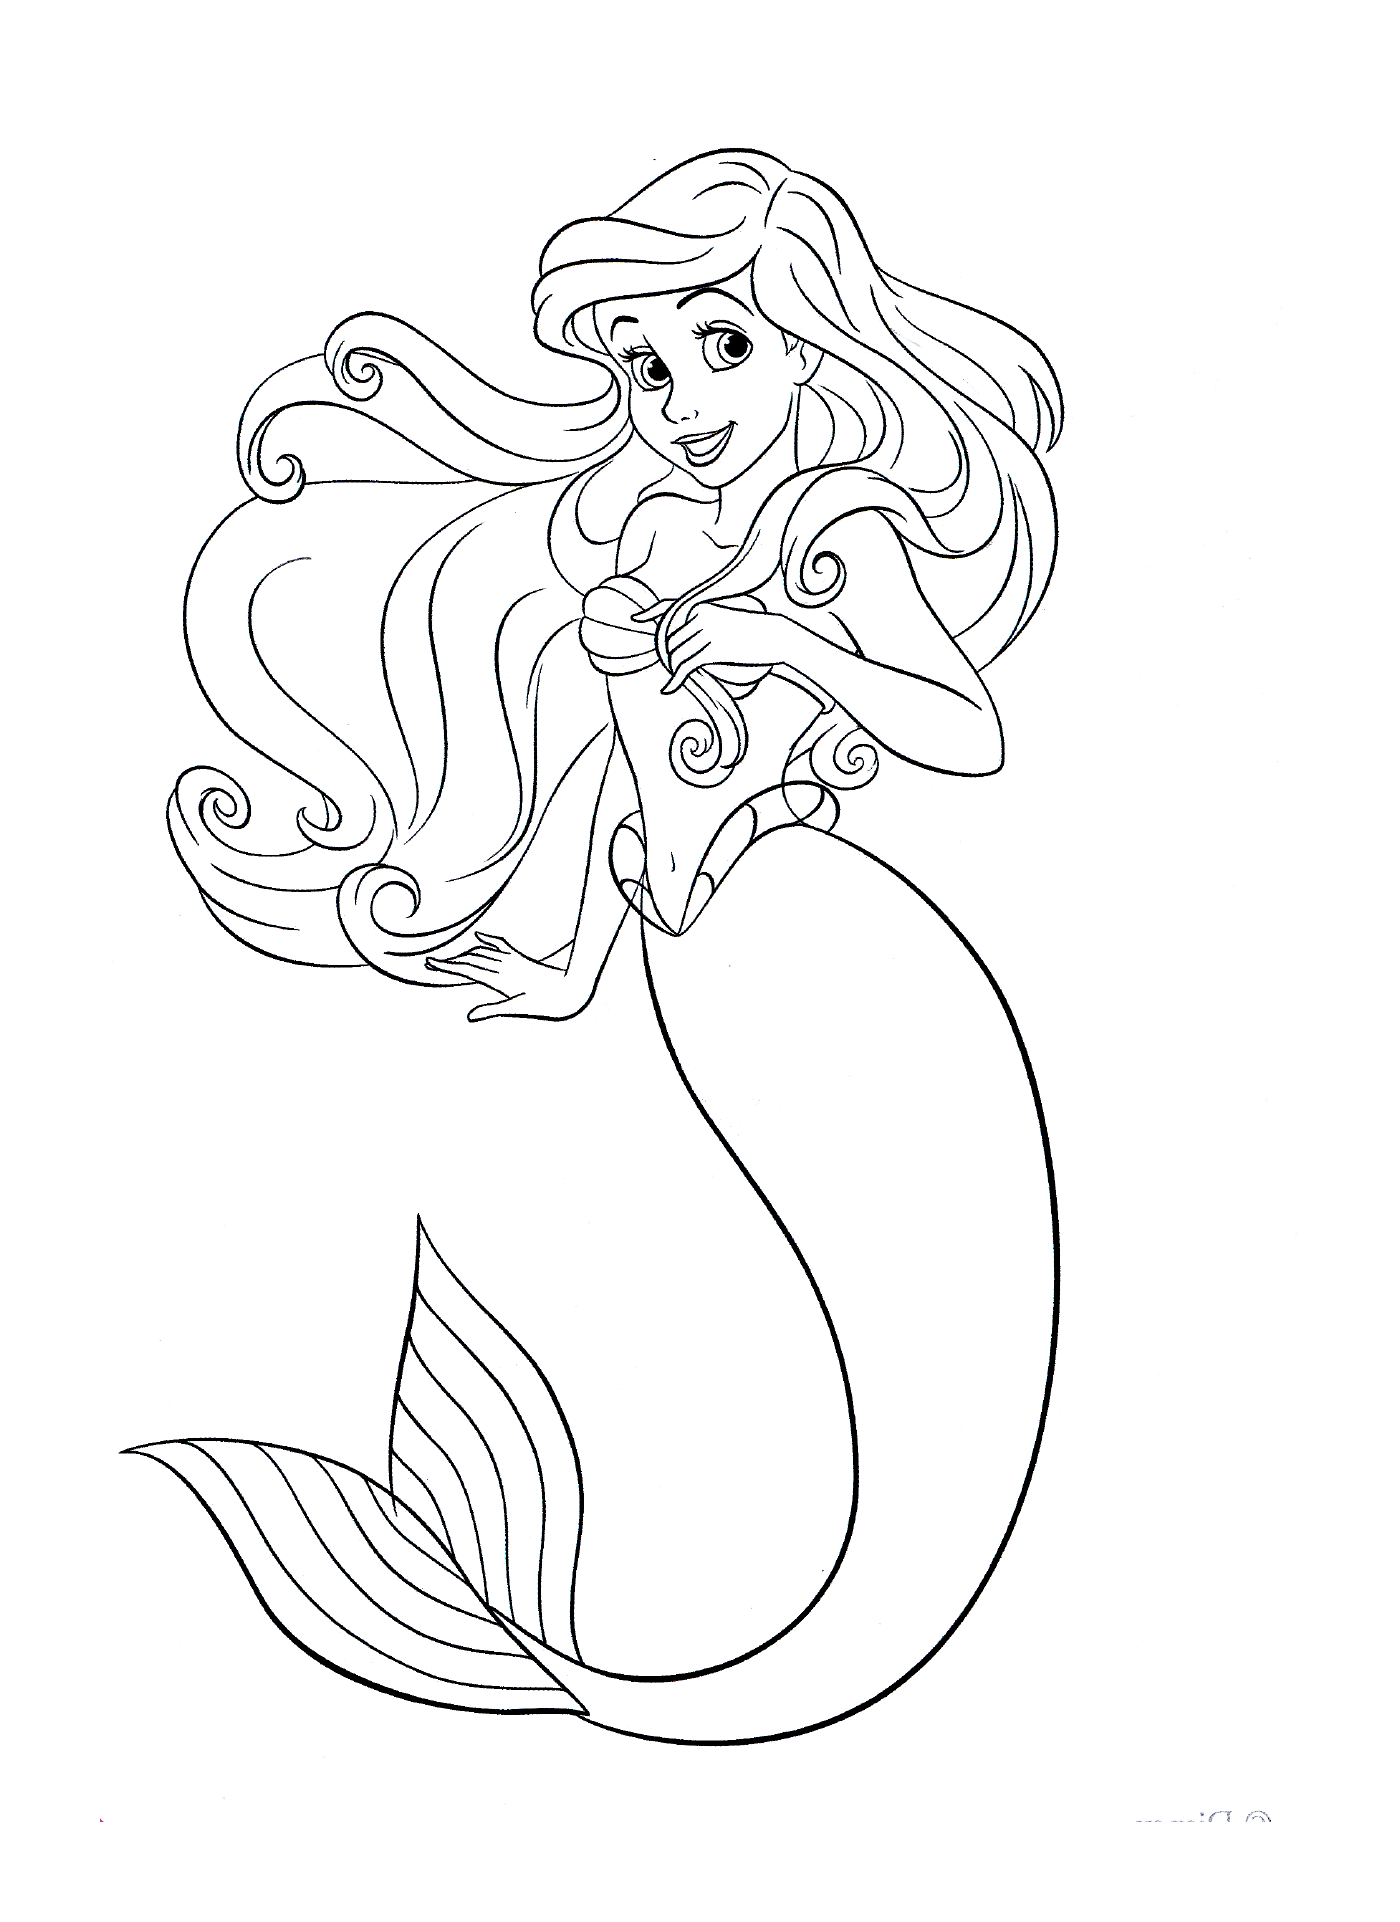  Ariel, the princess daughter of King Triton 